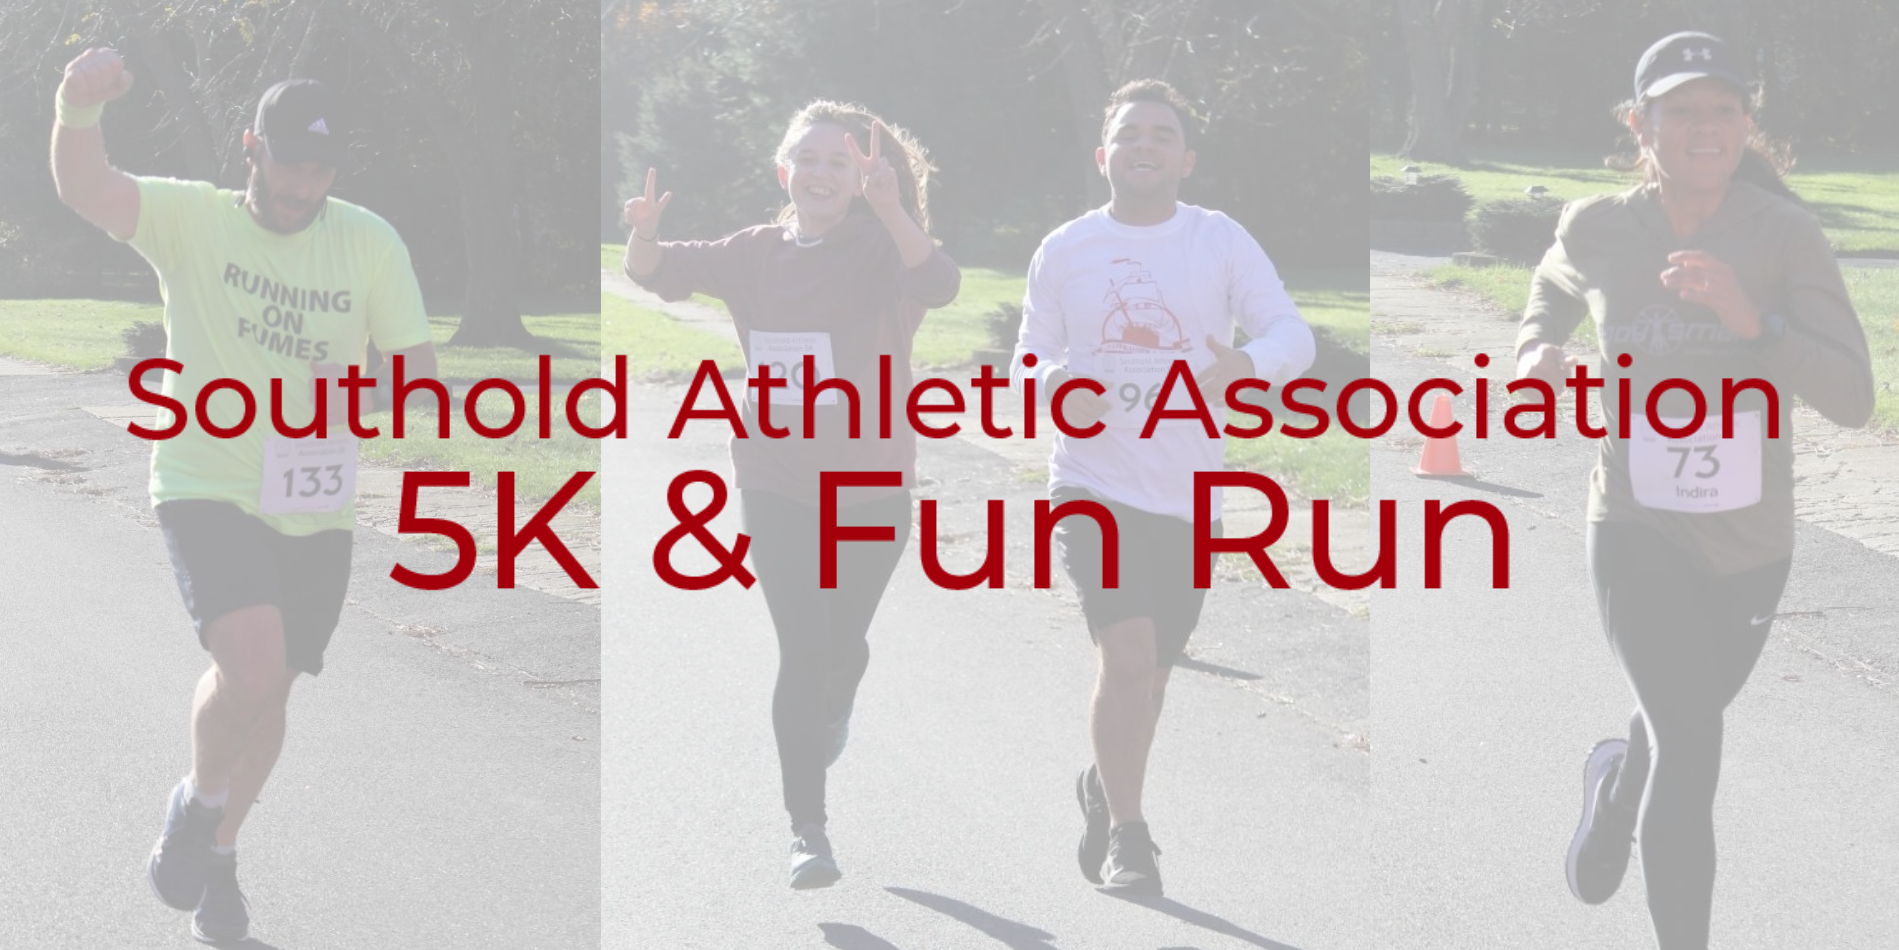 Southold Athletic Association 5K & Fun Run promotional image